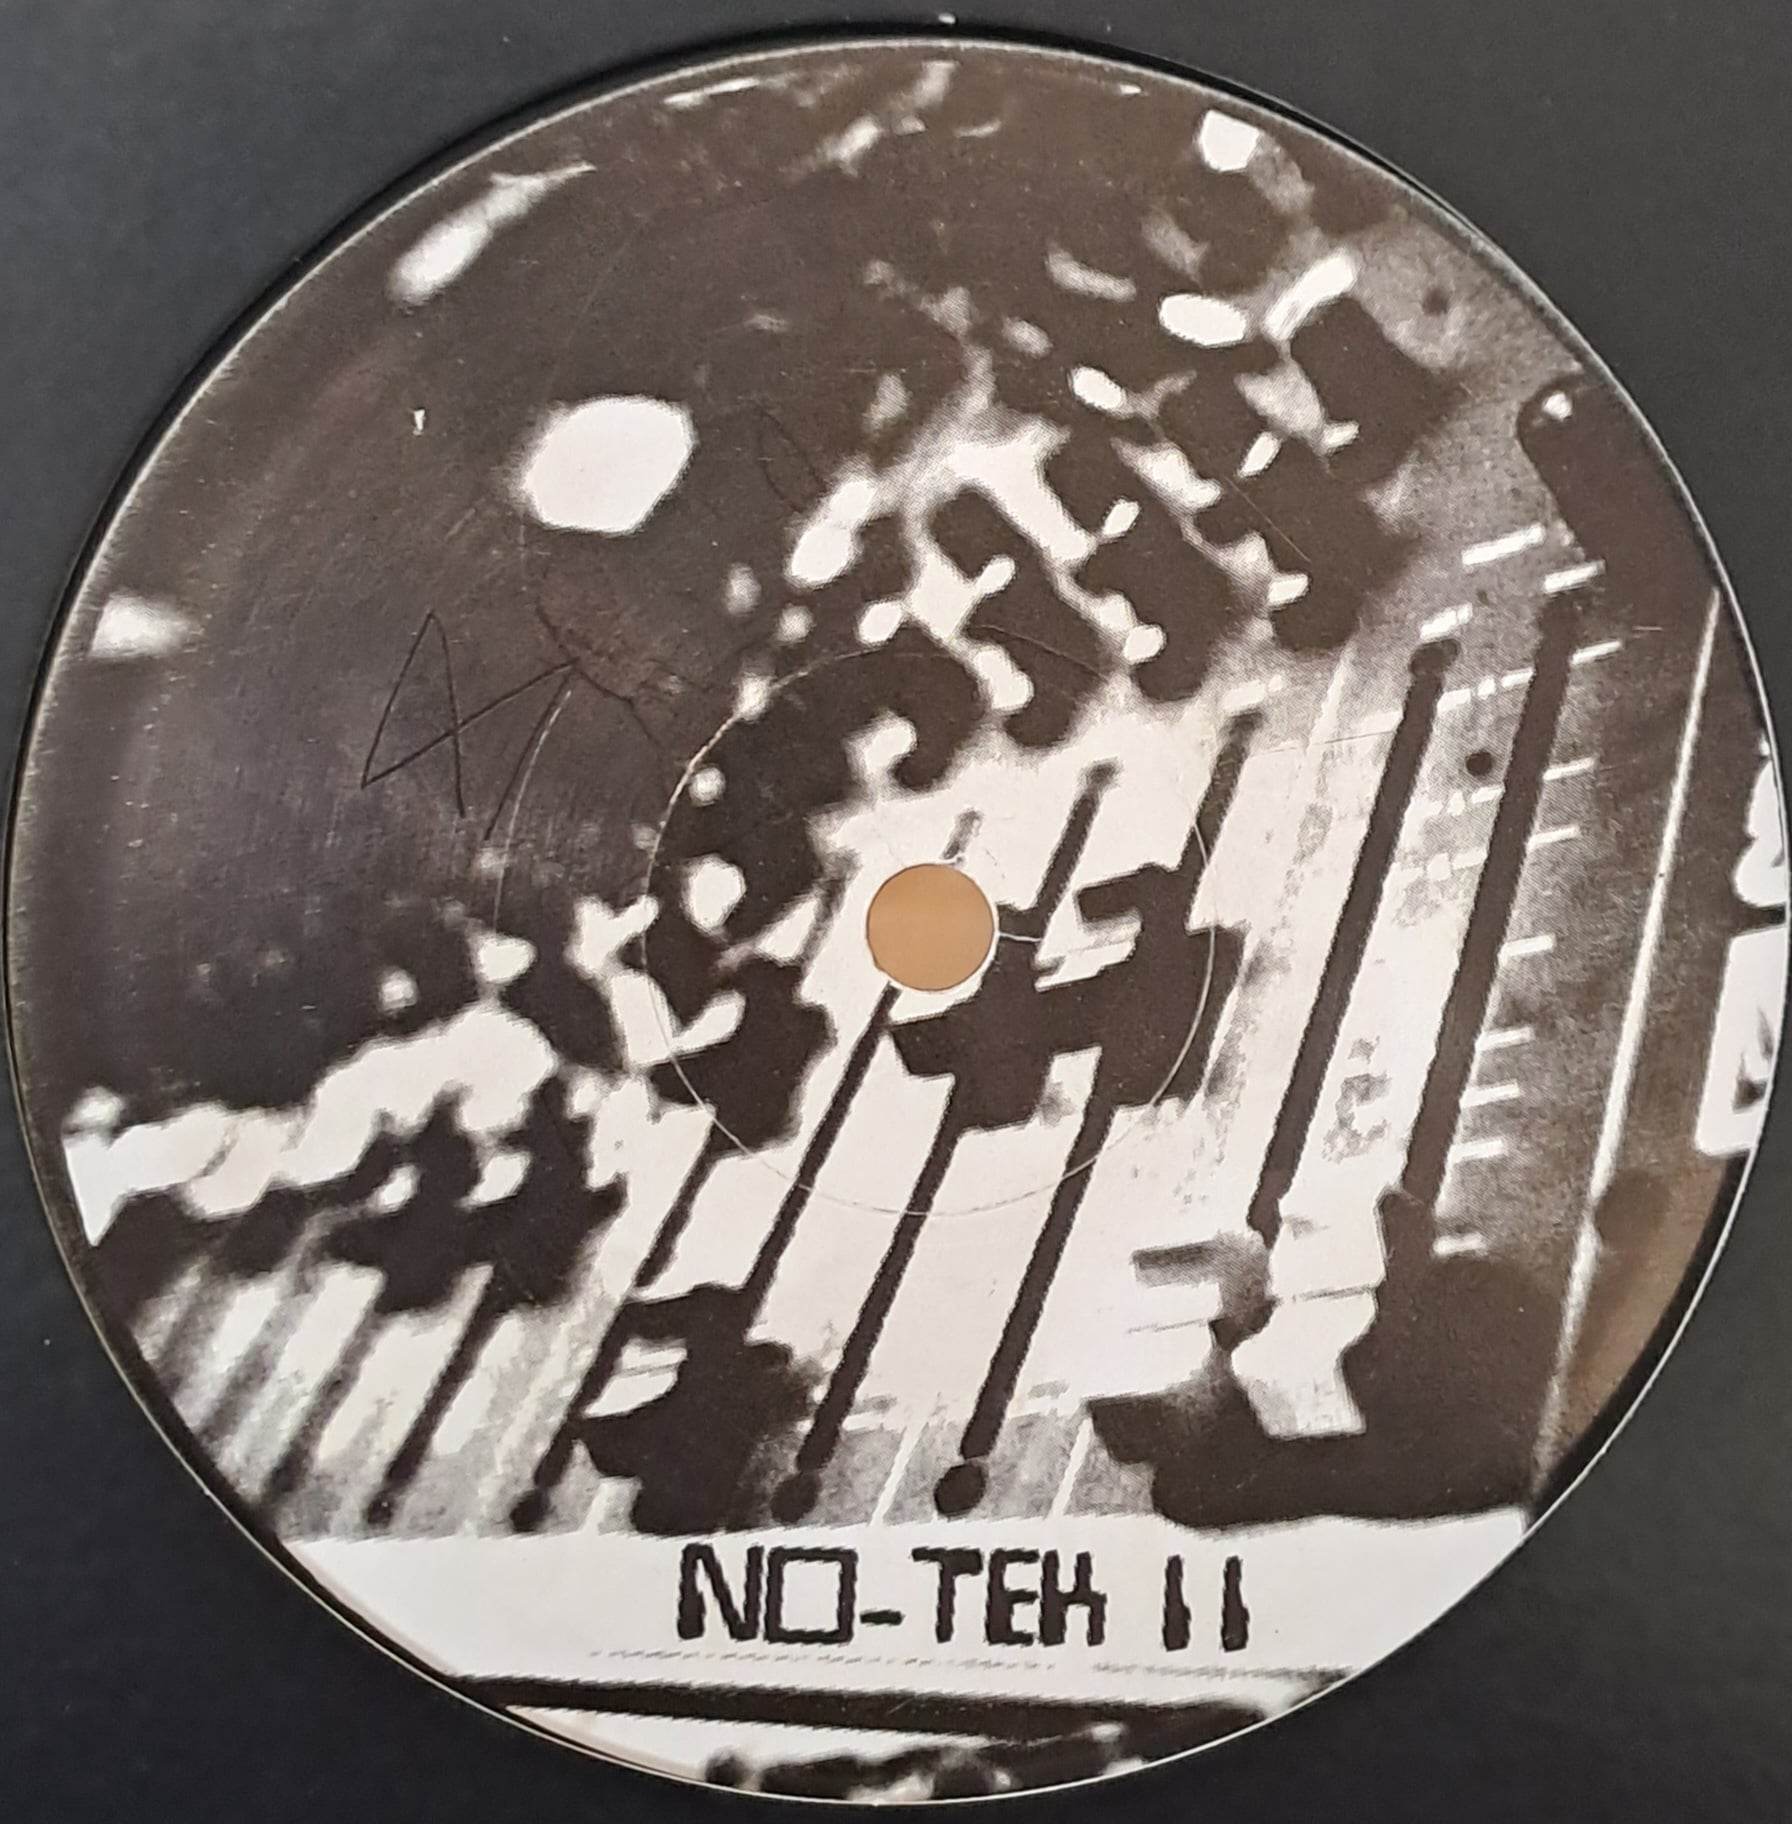 No-Tek Records 11 - vinyle hardcore